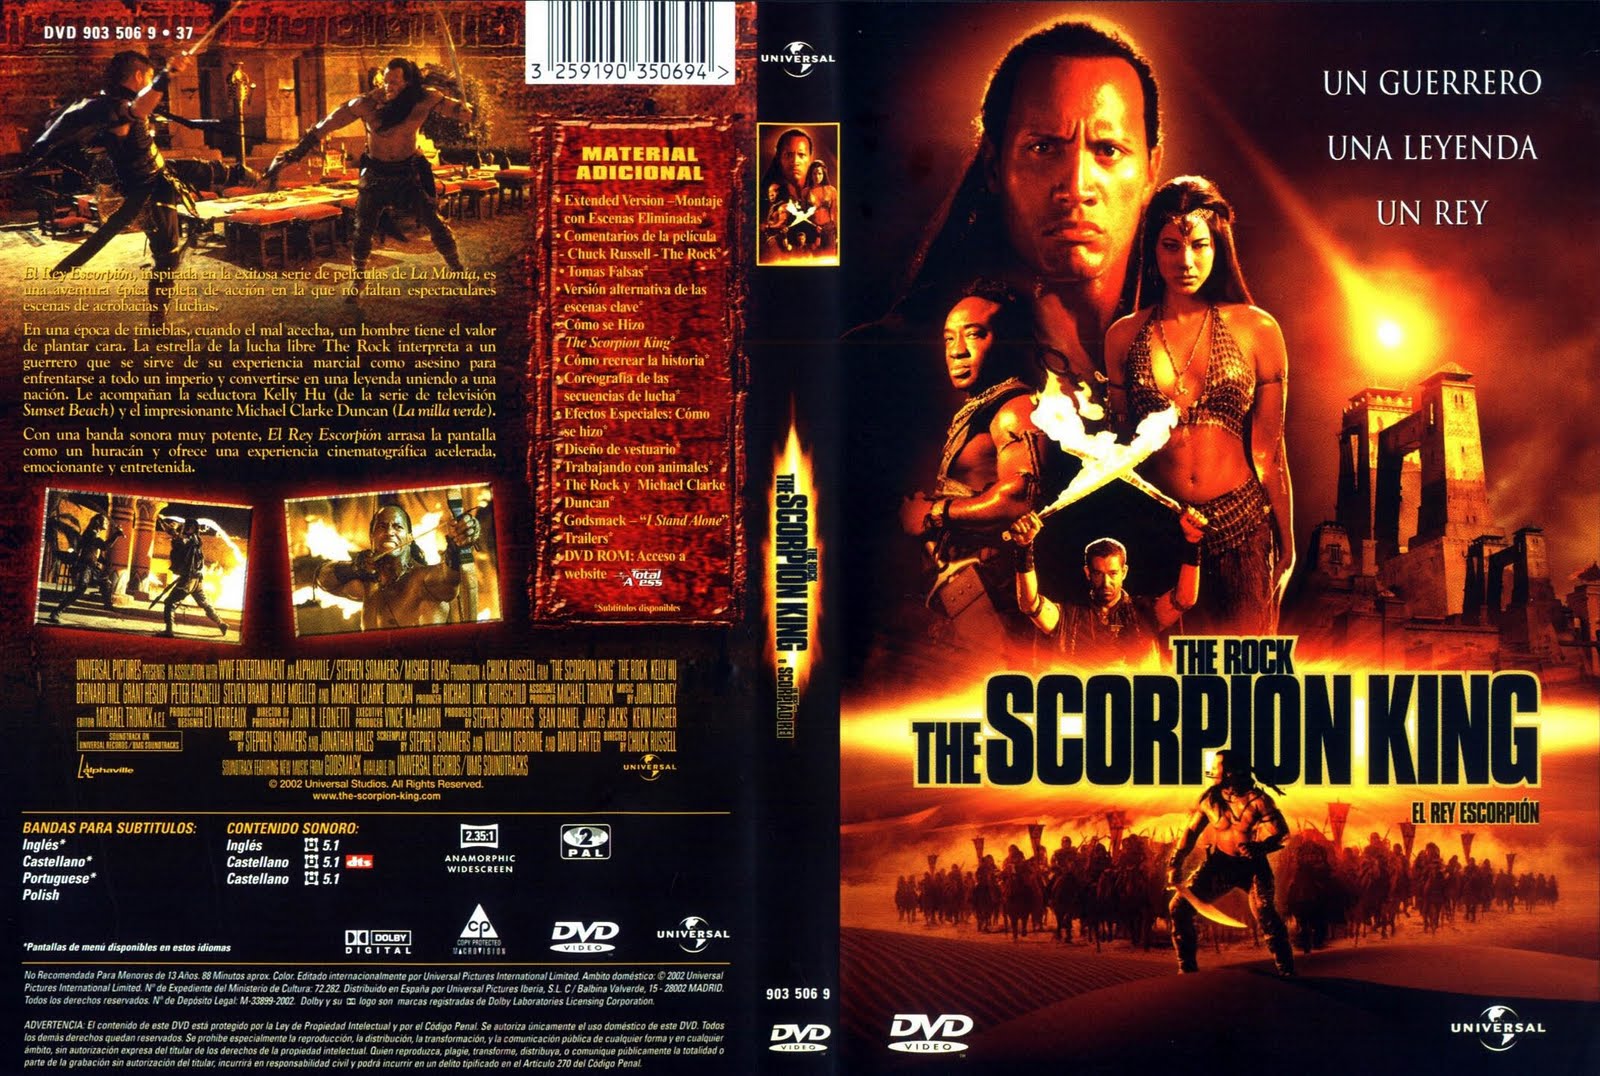 The Scorpion King (2002) Dwayne Johnson